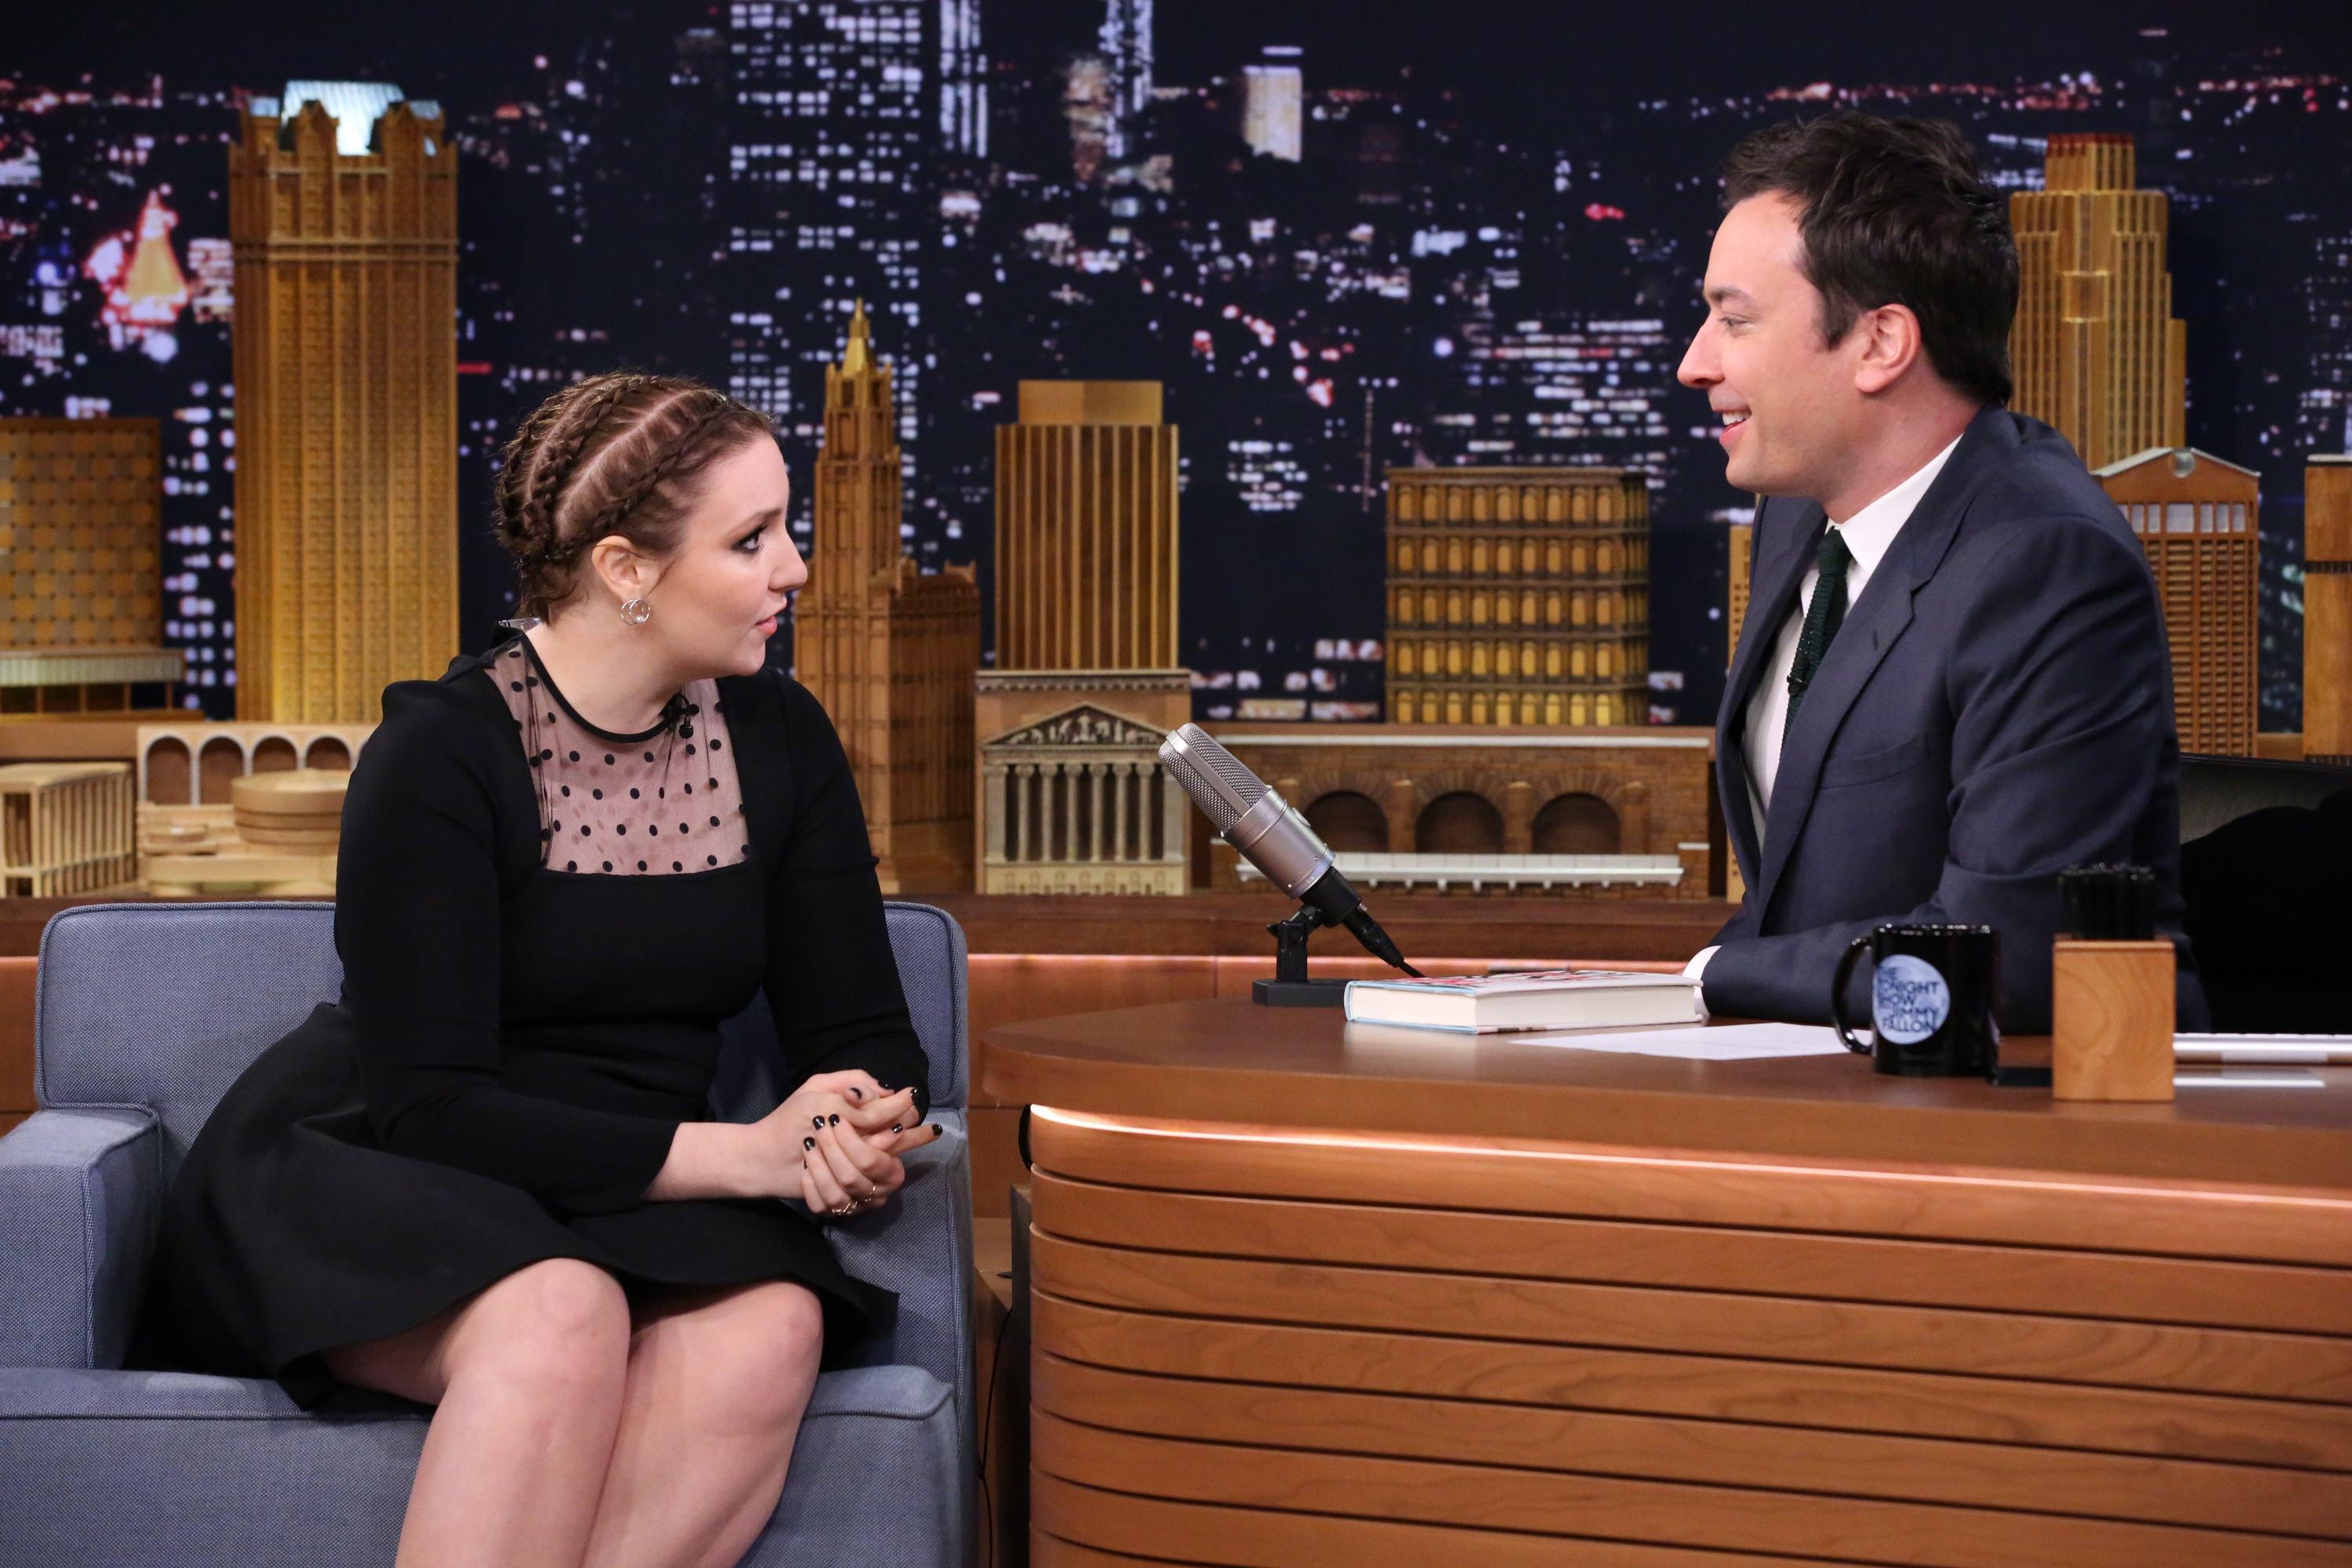 Lena Dunham Visits "The Tonight Show Starring Jimmy Fallon" in New York City on Jan. 8, 2015.